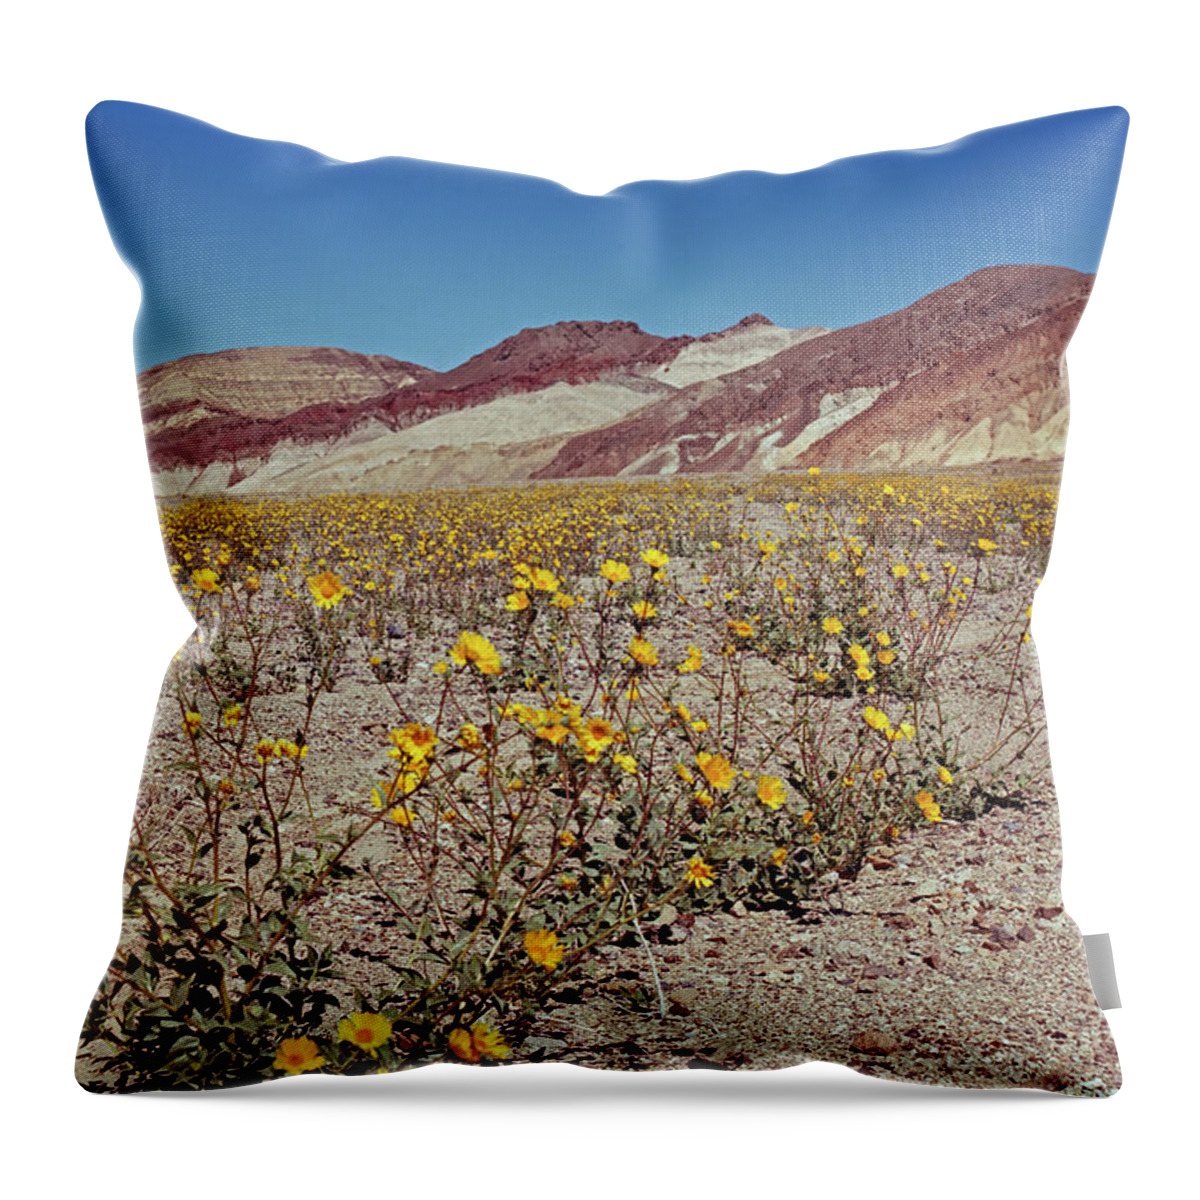 Tom Daniel Throw Pillow featuring the photograph Desert Gold Super Bloom by Tom Daniel